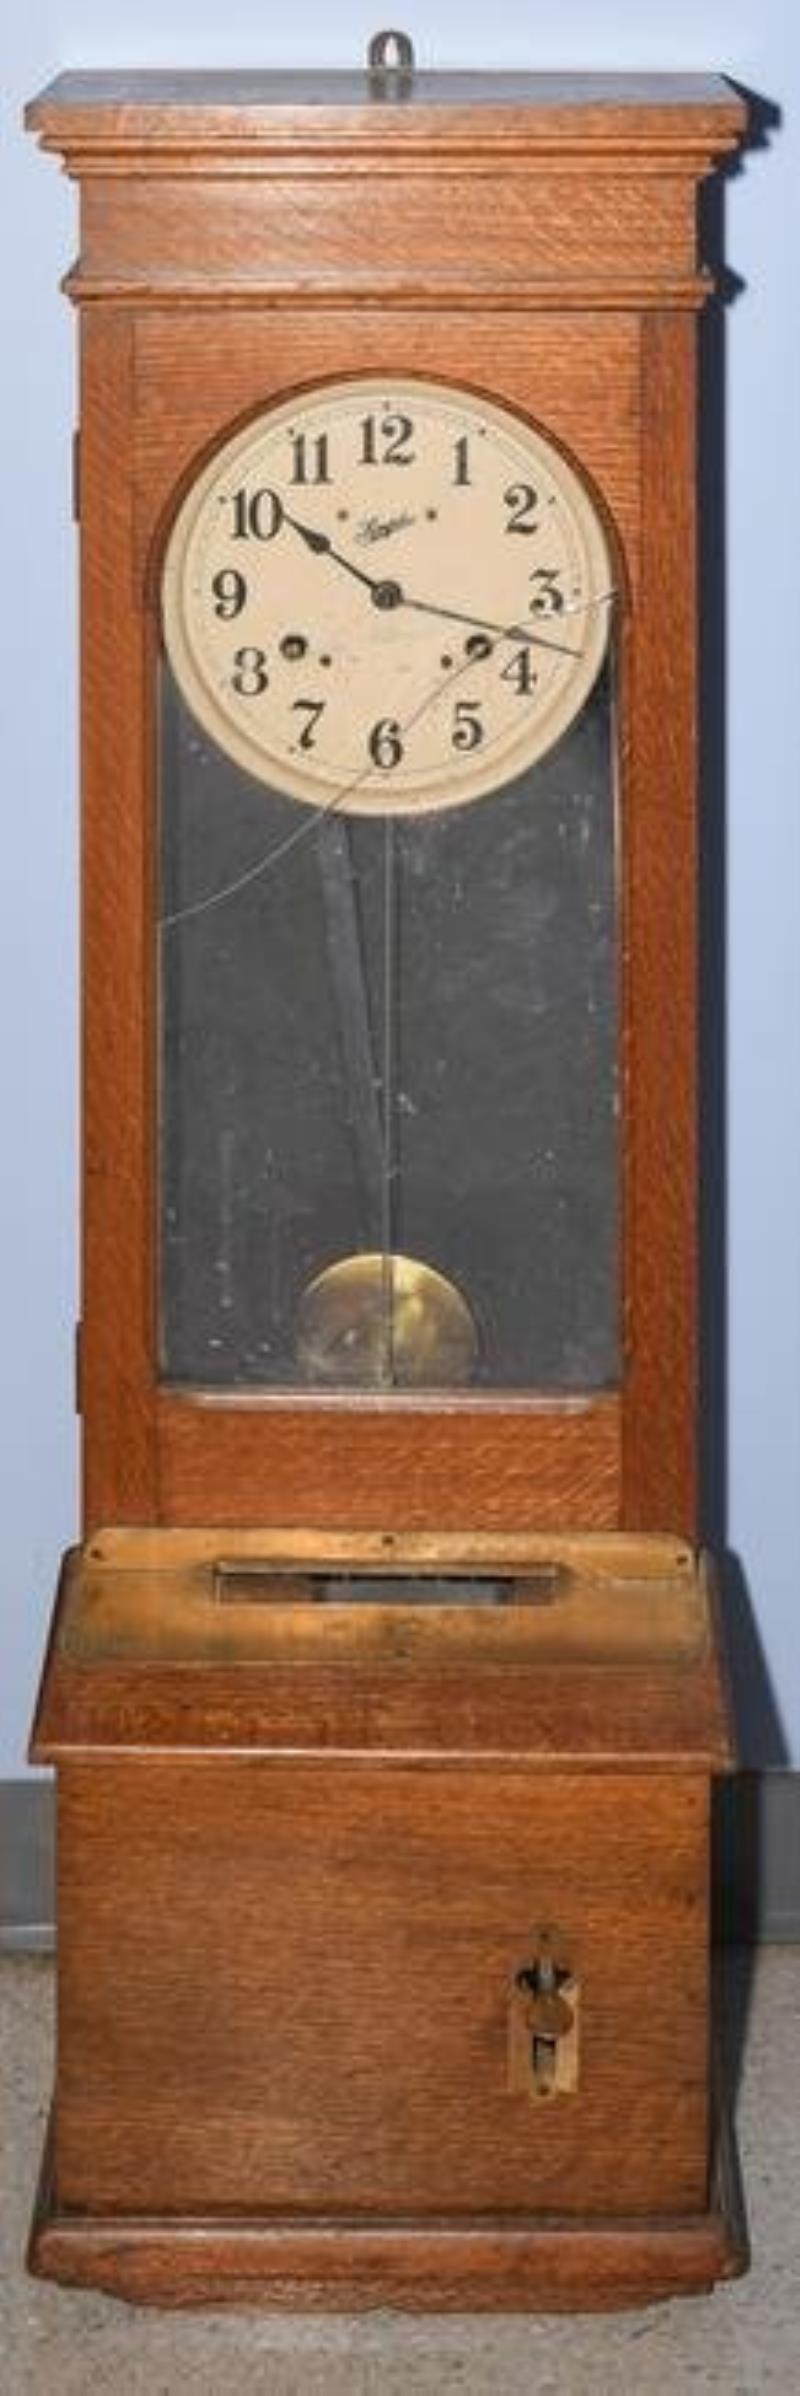 Simplex time recorder clock, Gardner MA